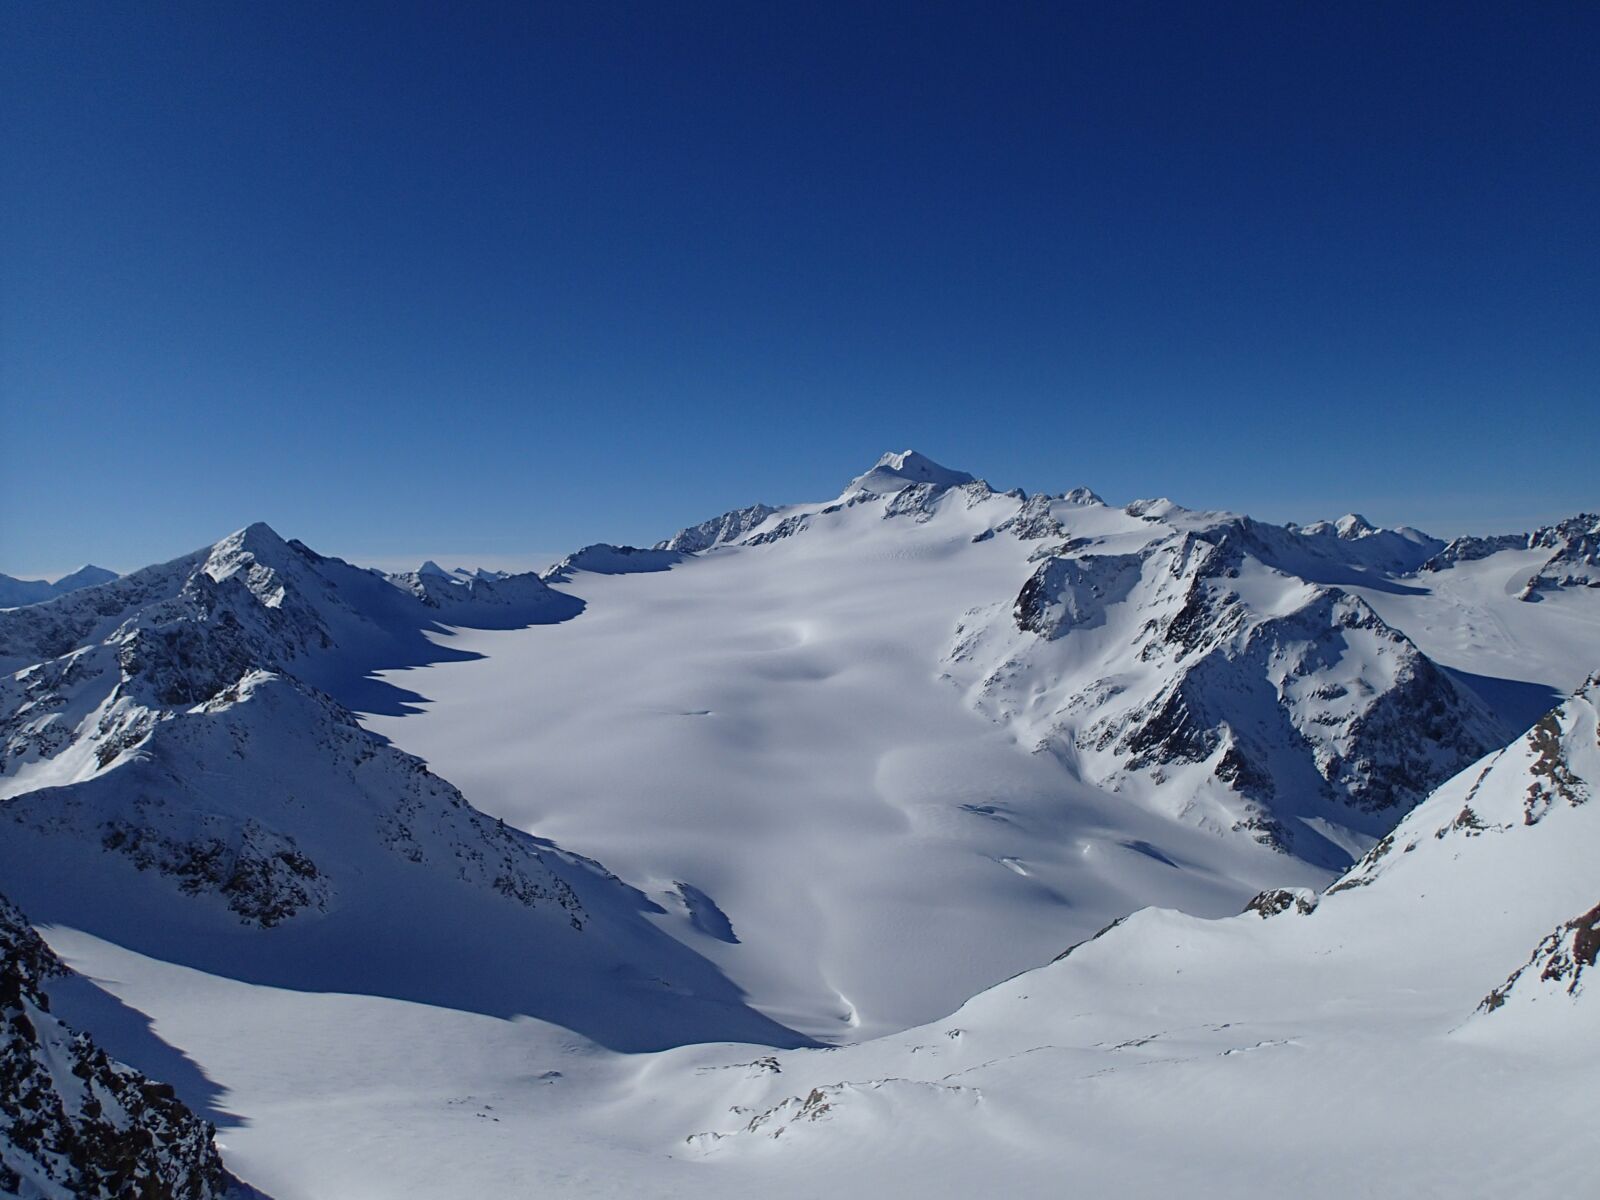 Olympus TG-2 sample photo. Mountains, skis, snow photography